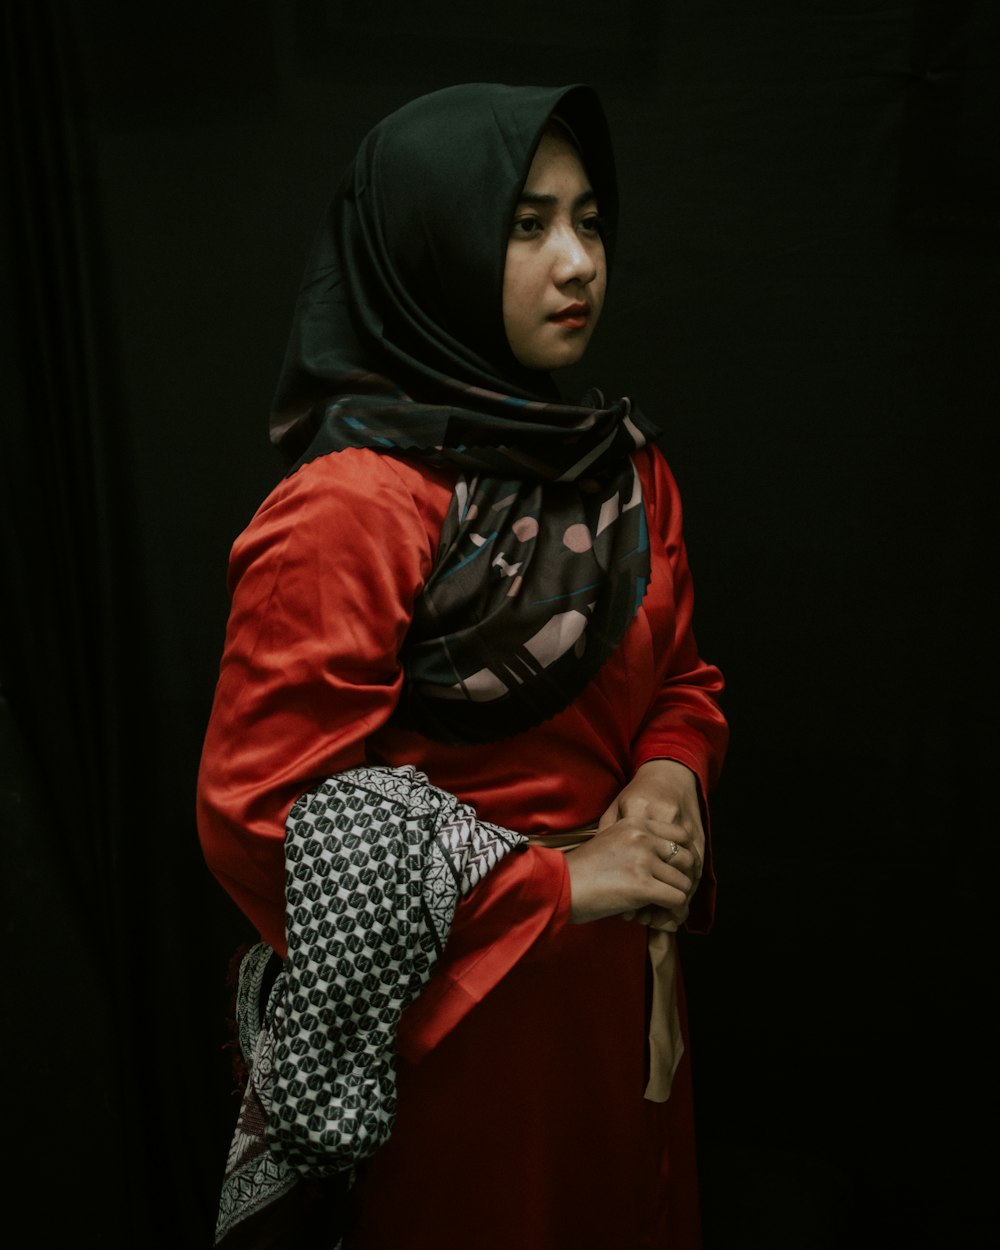 Una persona con una túnica roja